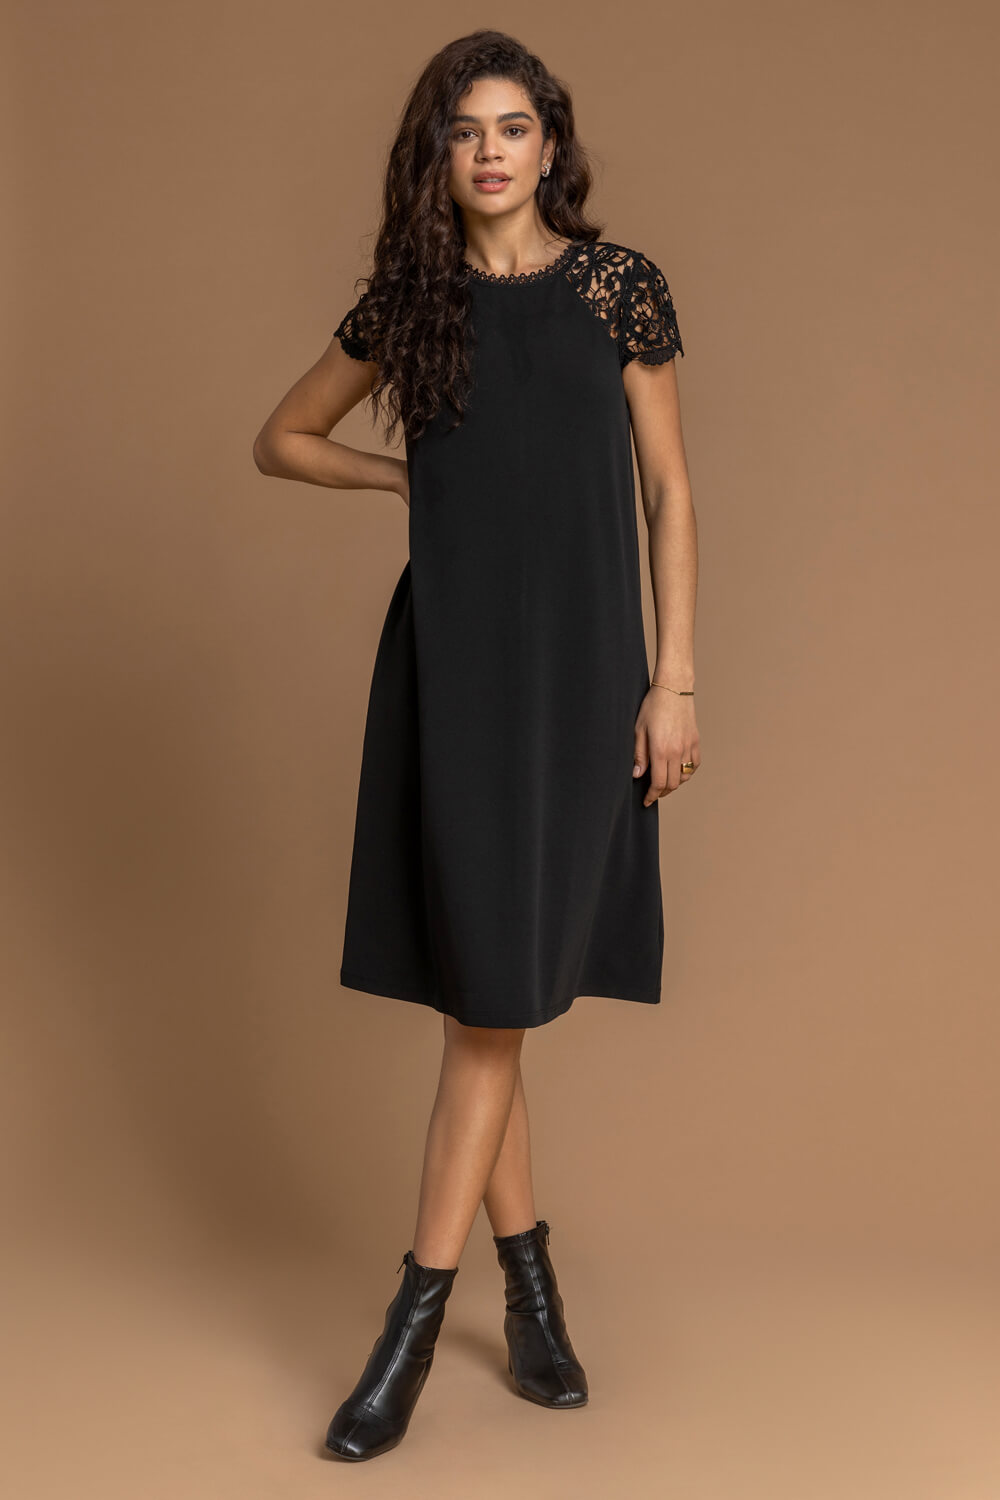 Black Lace Trim High Neck Shift Dress, Image 3 of 4